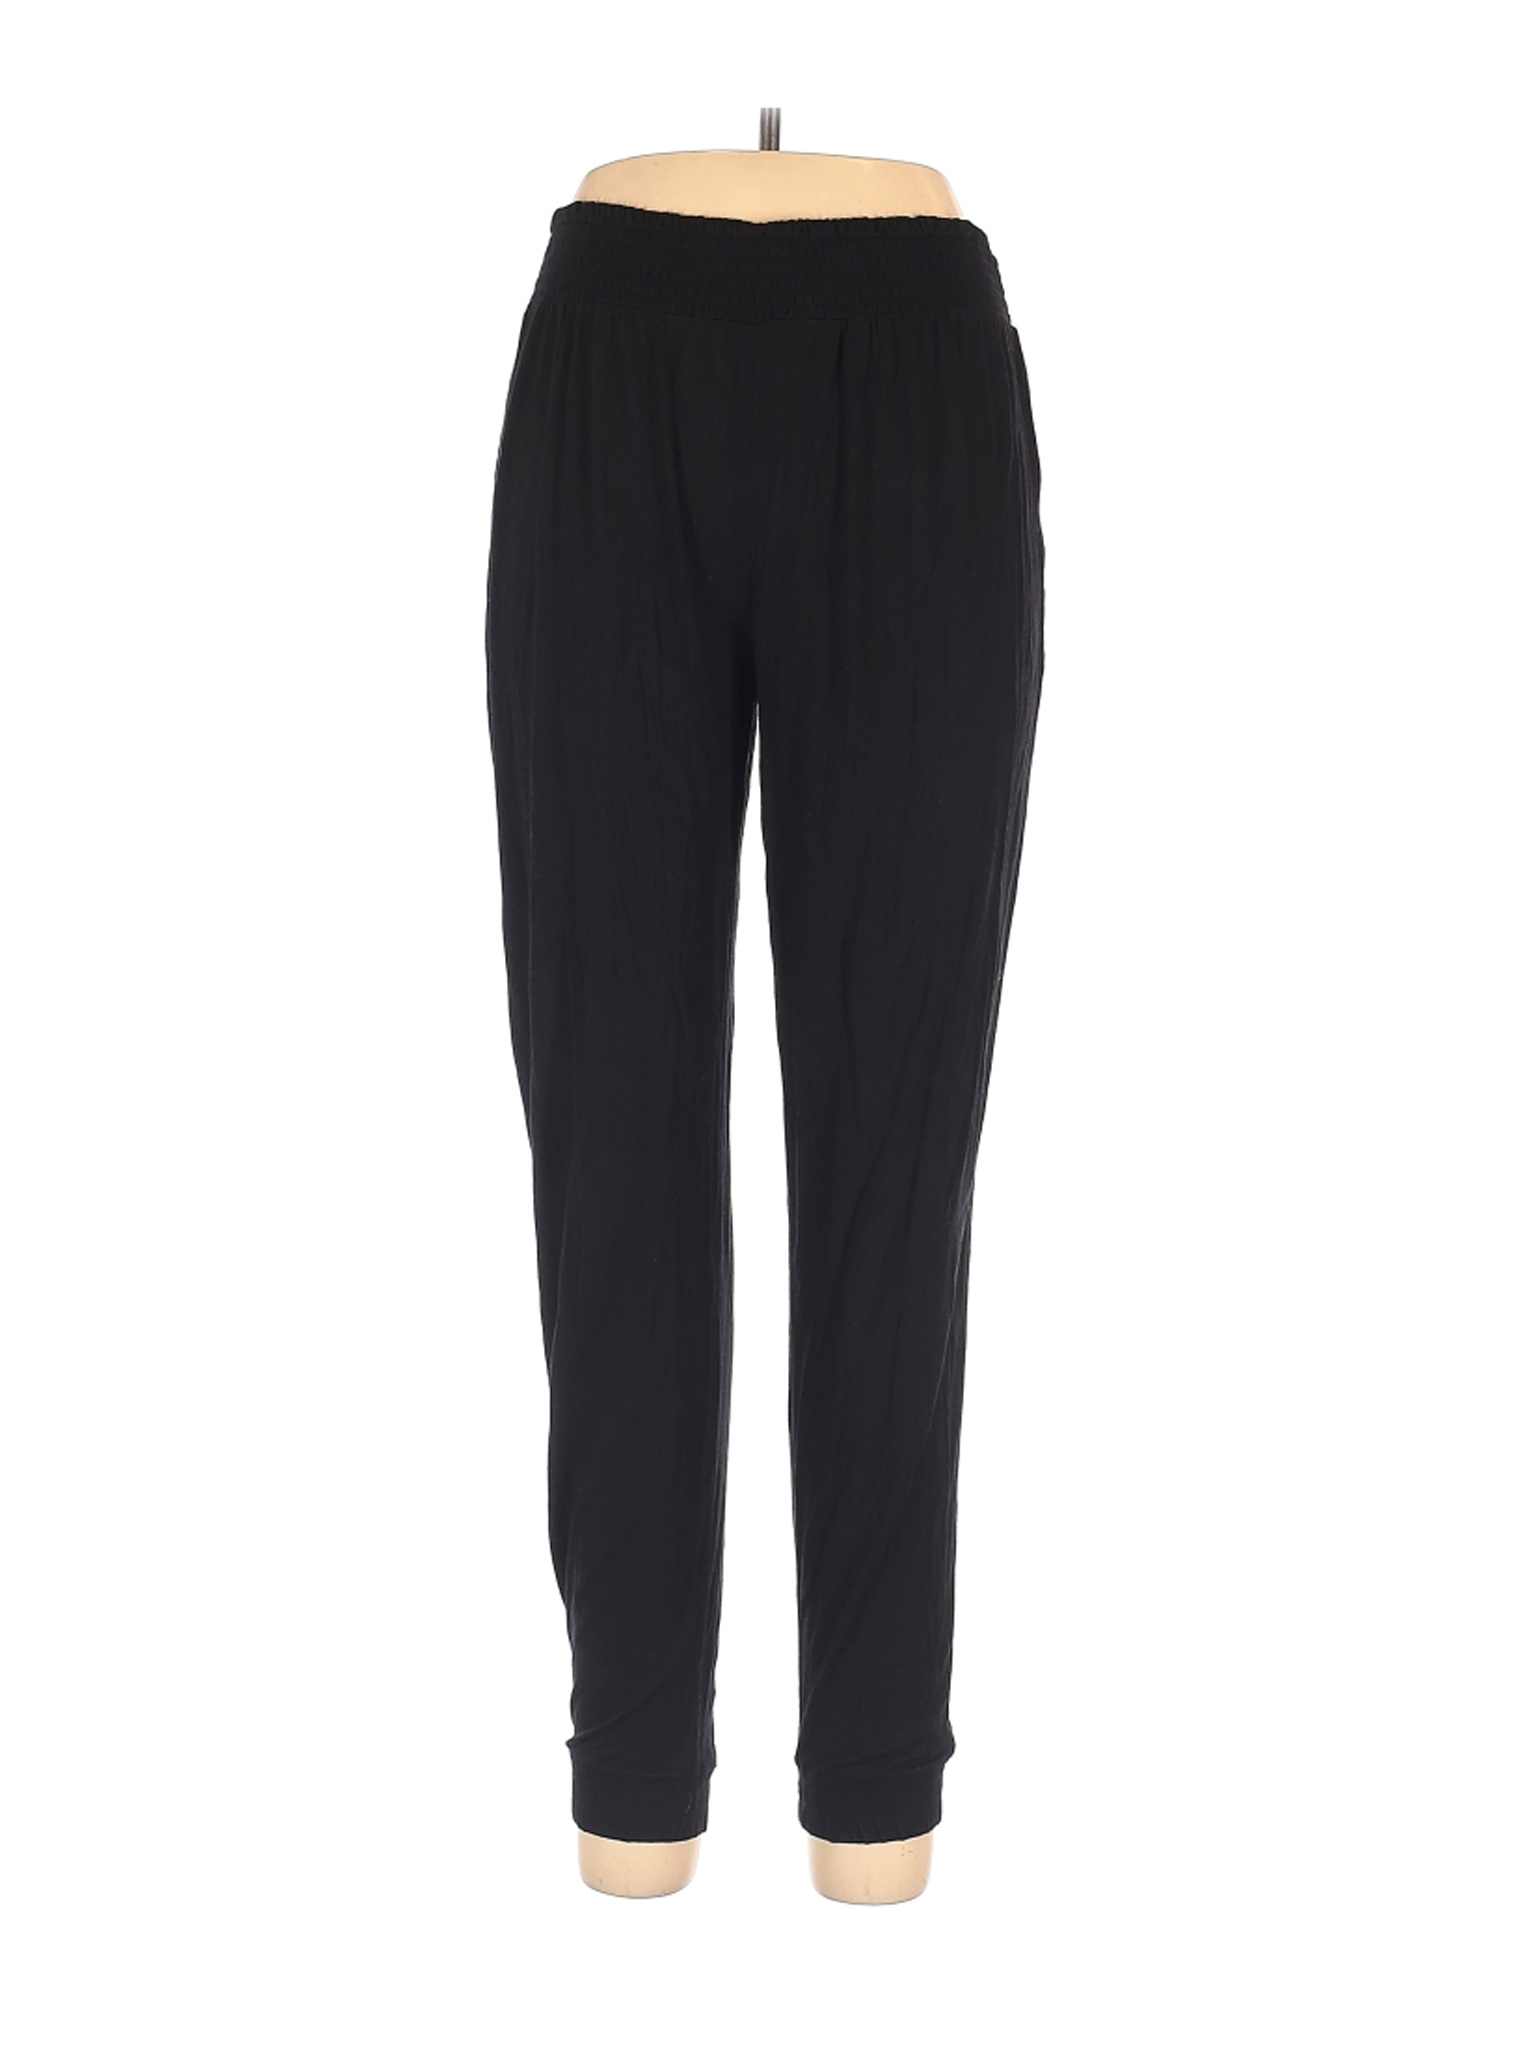 Mossimo Supply Co. Women Black Casual Pants L | eBay